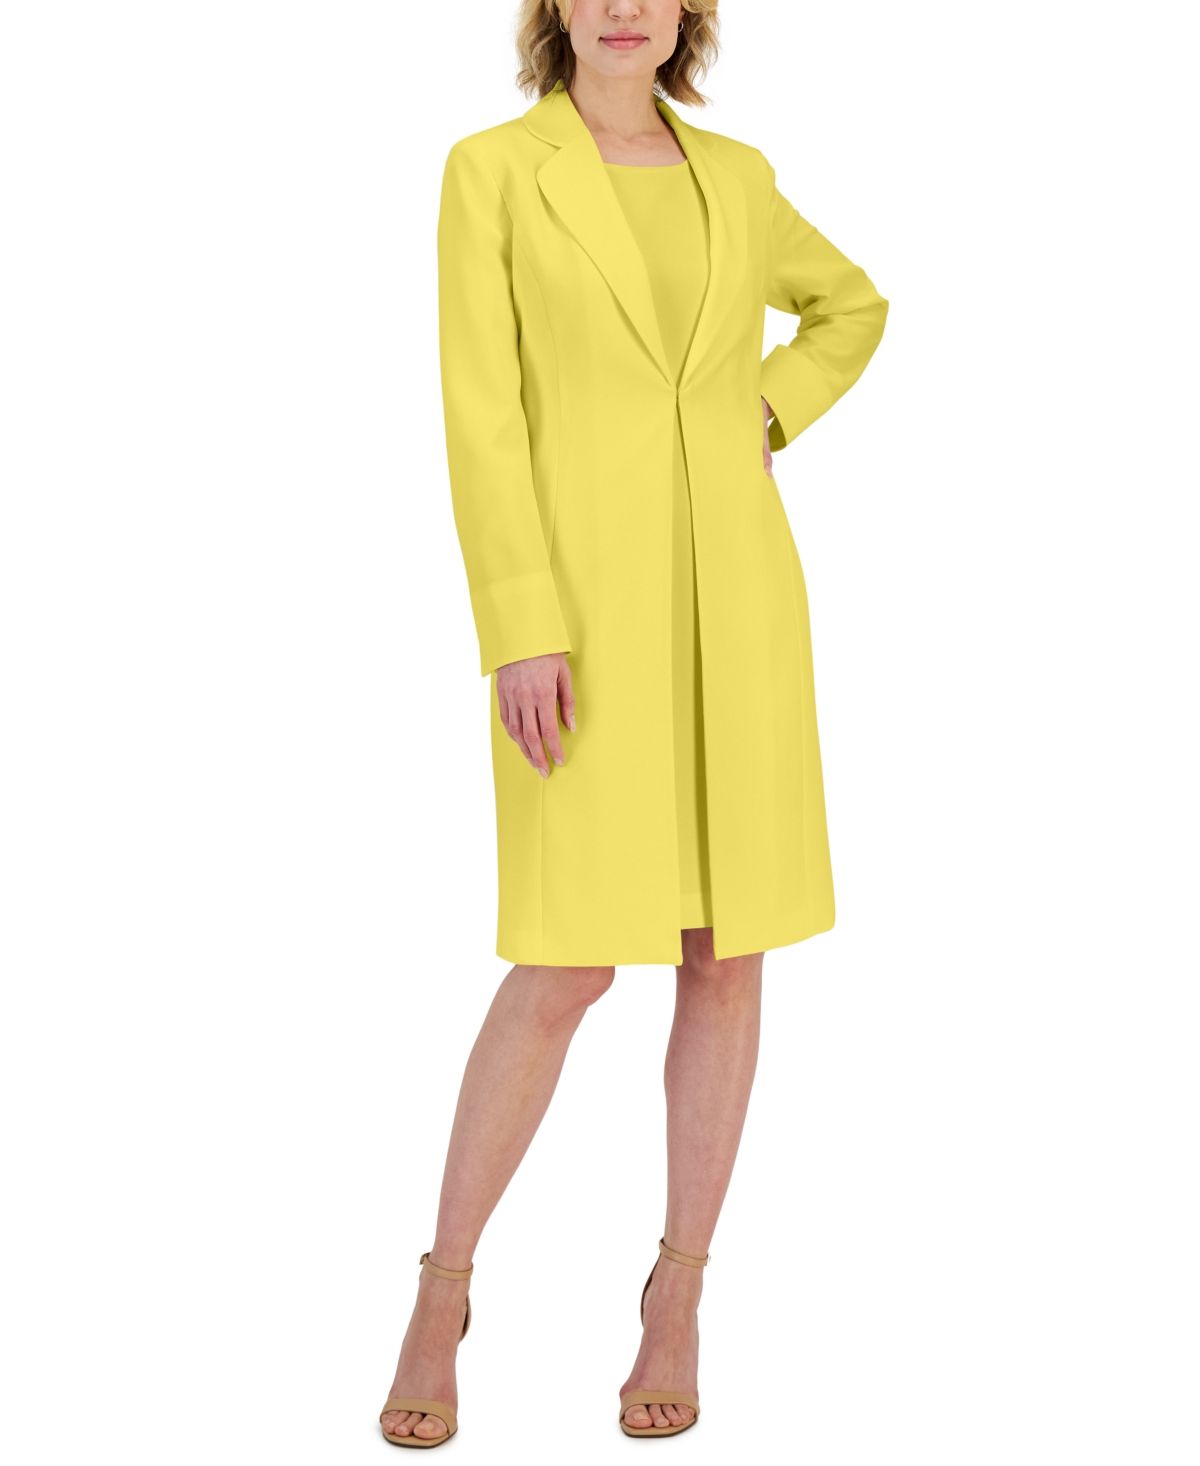 Women's Crepe Topper Jacket & Sheath Dress Suit, Regular and Petite Sizes - Golden Sunset